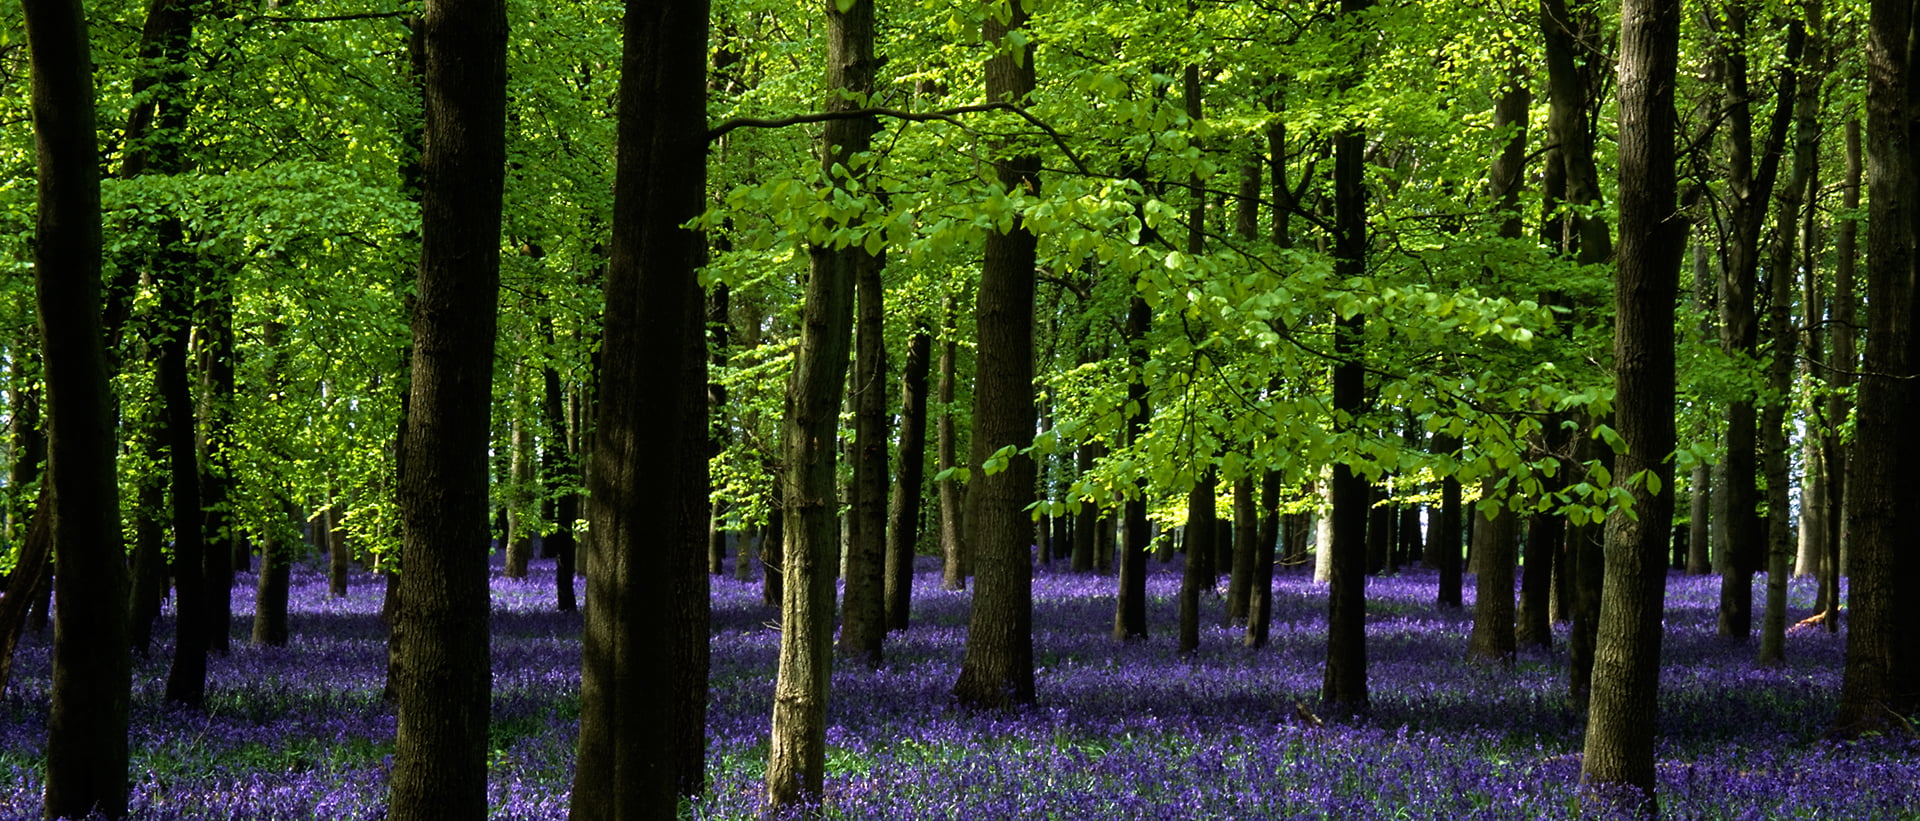 forest photograph, ashridge park, hertfordshire